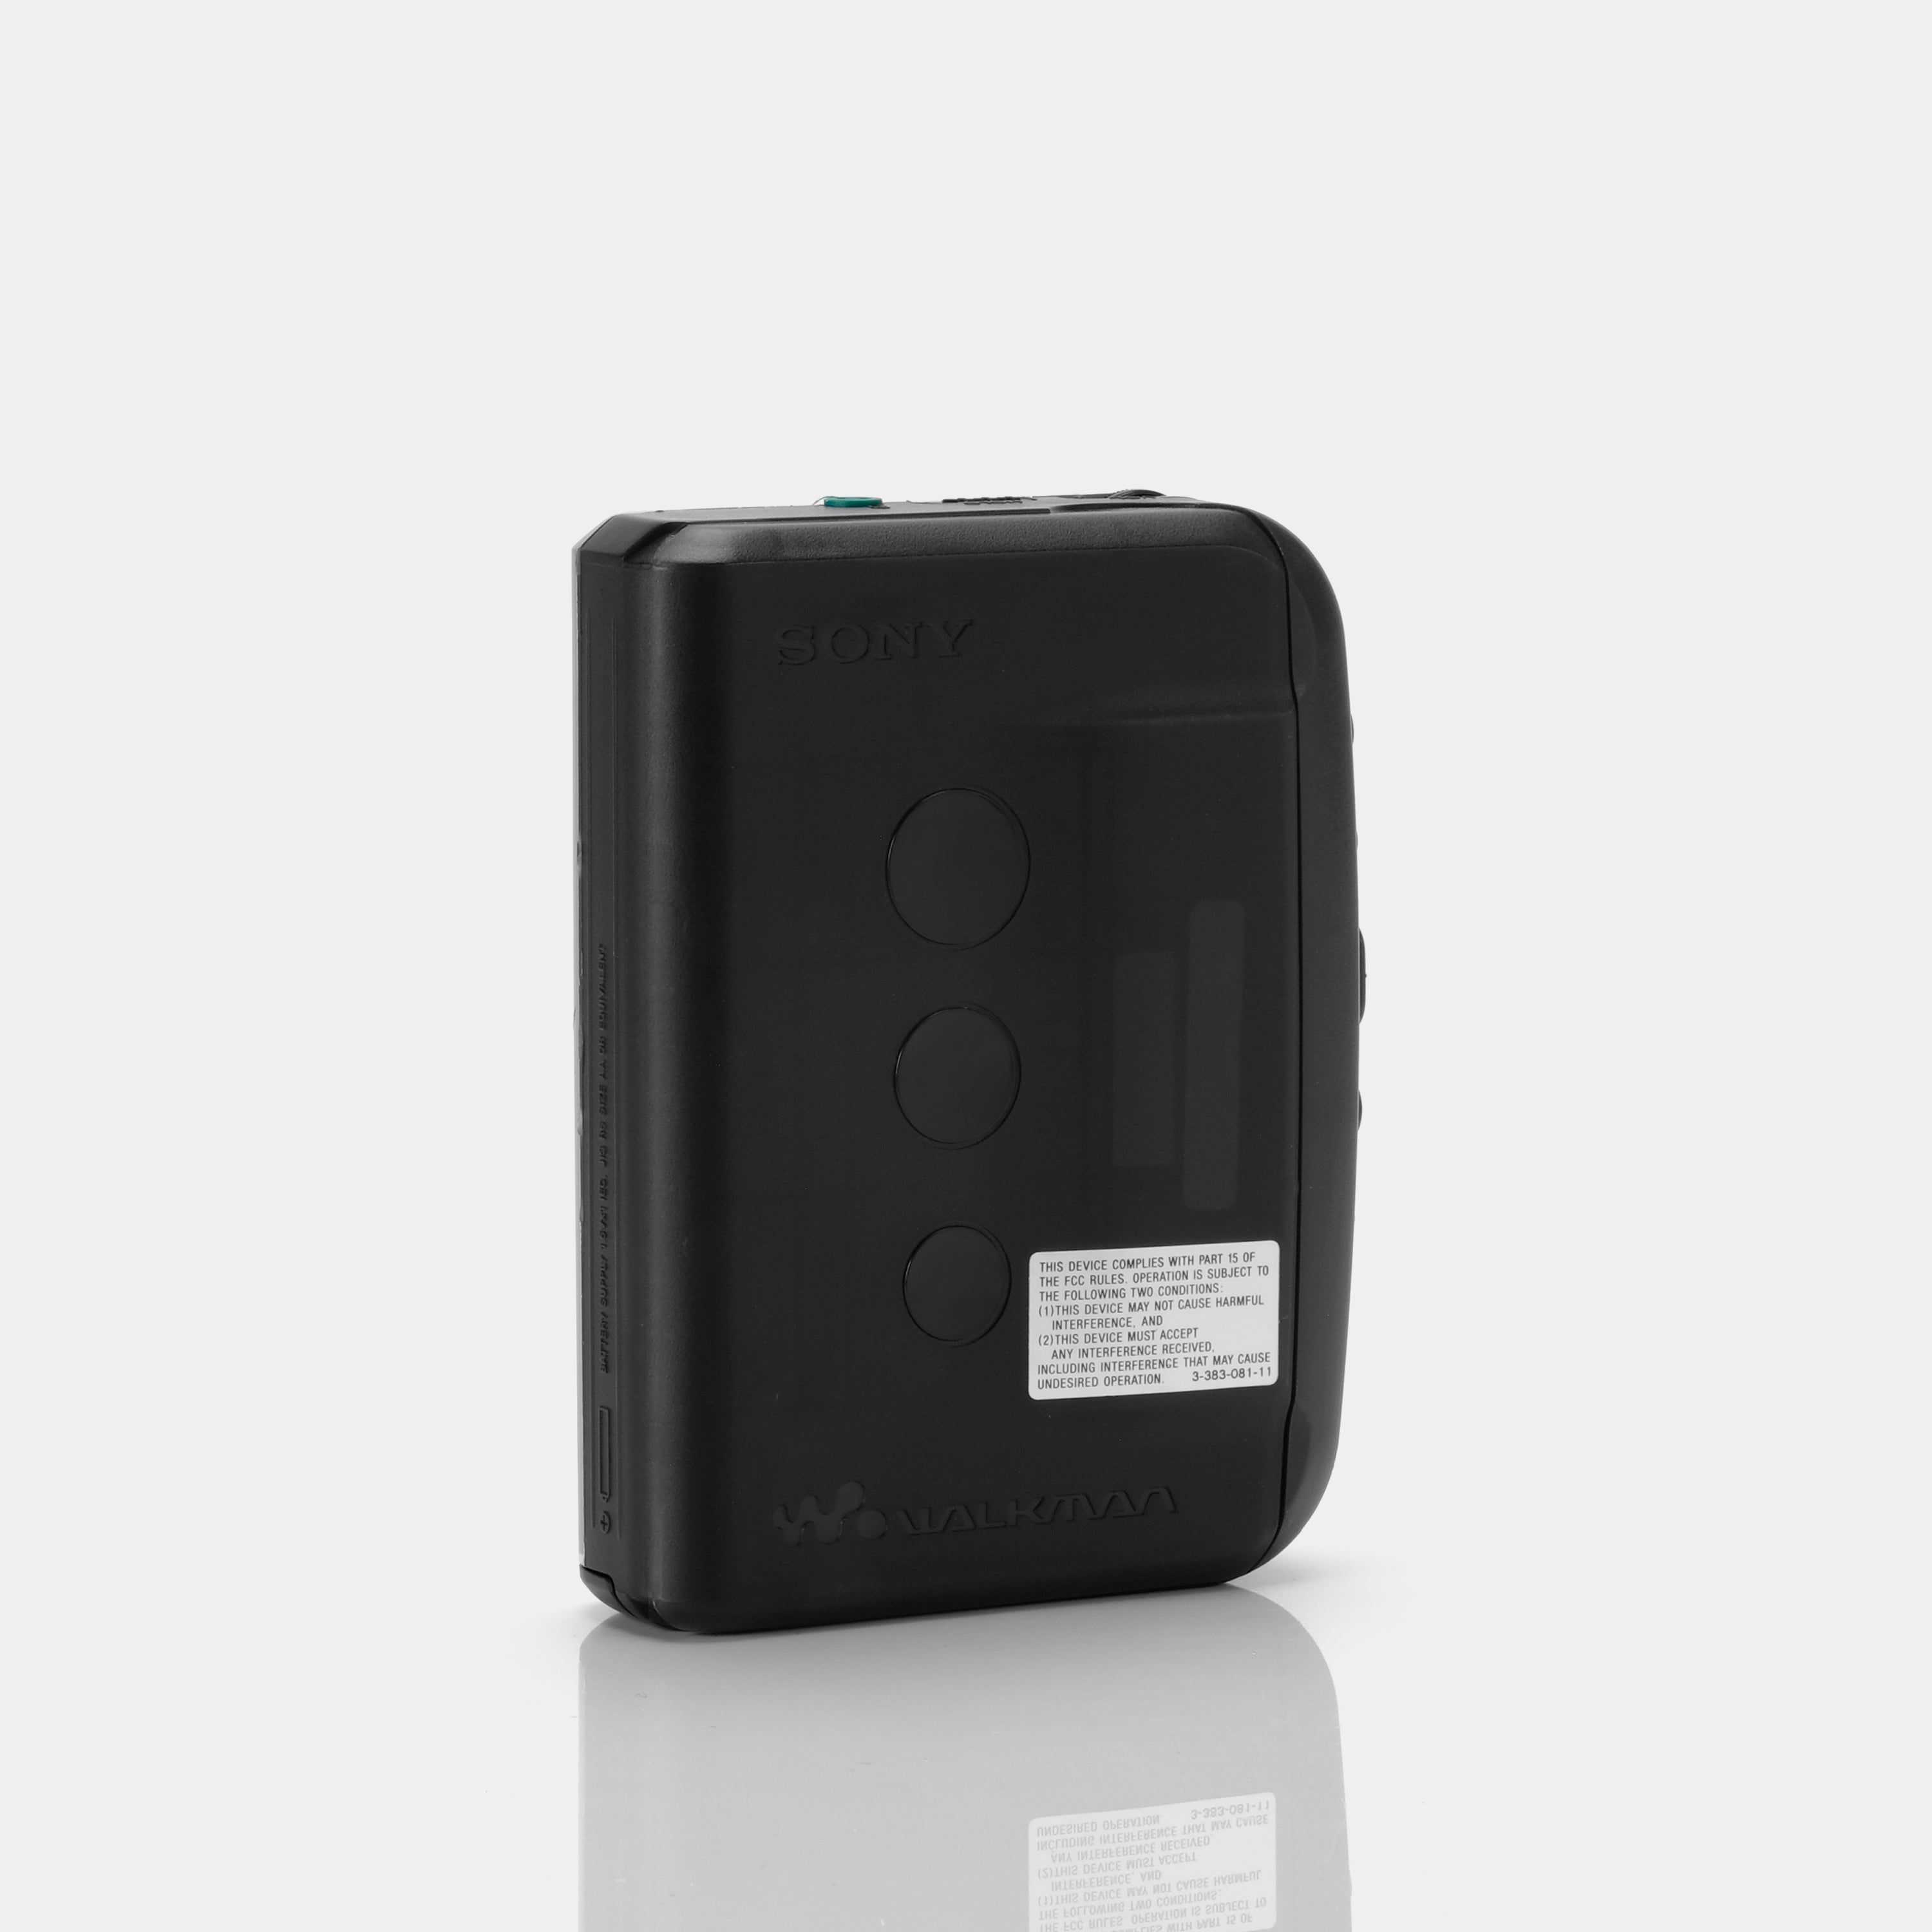 Sony Walkman WM-FX290 AM/FM Portable Cassette Player